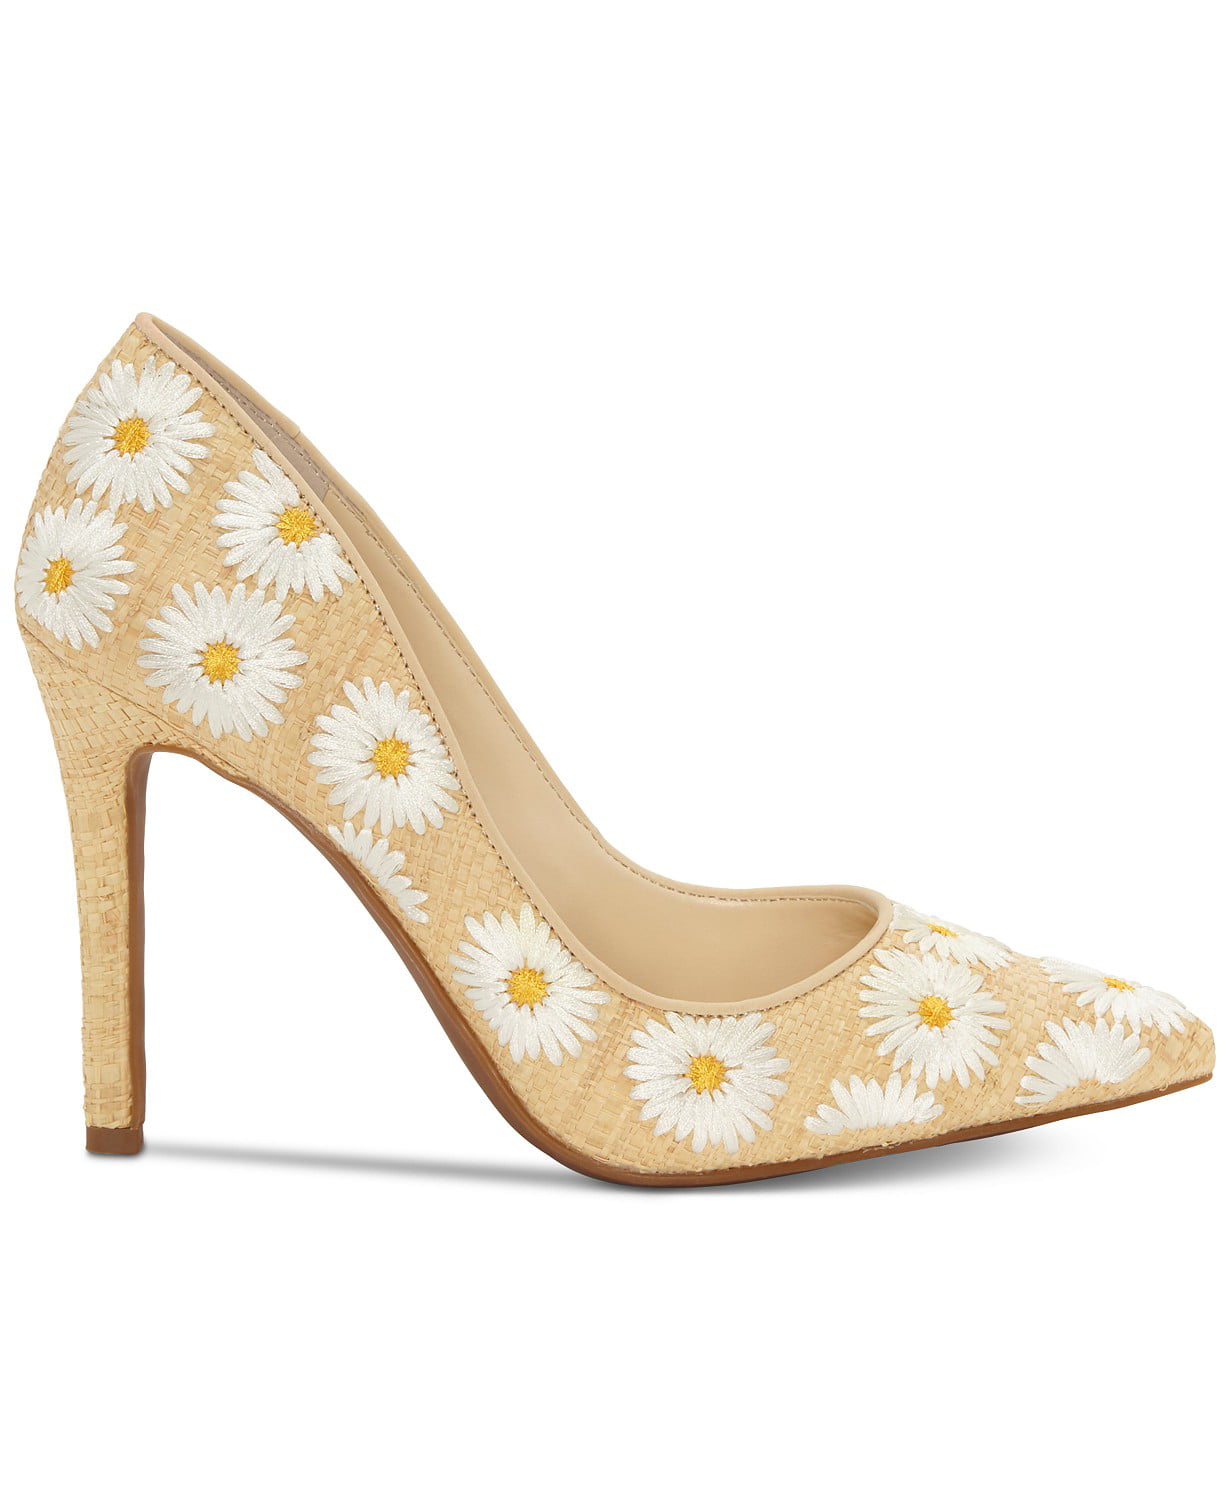 jessica simpson daisy shoes